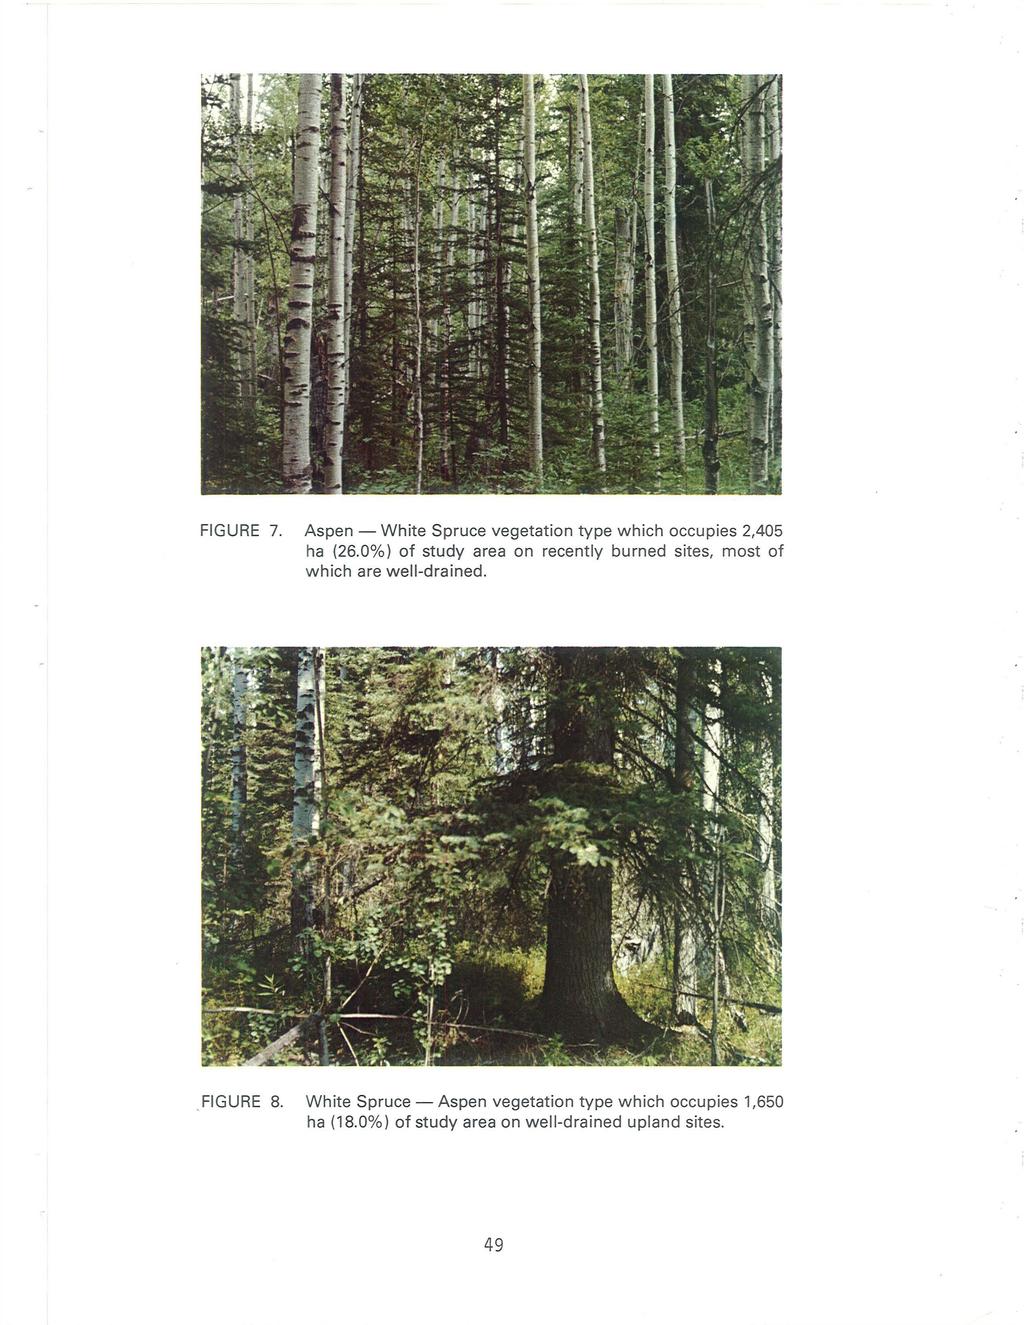 FIGURE 7. Aspen - White Spruce vegetation type which occupies 2,405 ha (26.